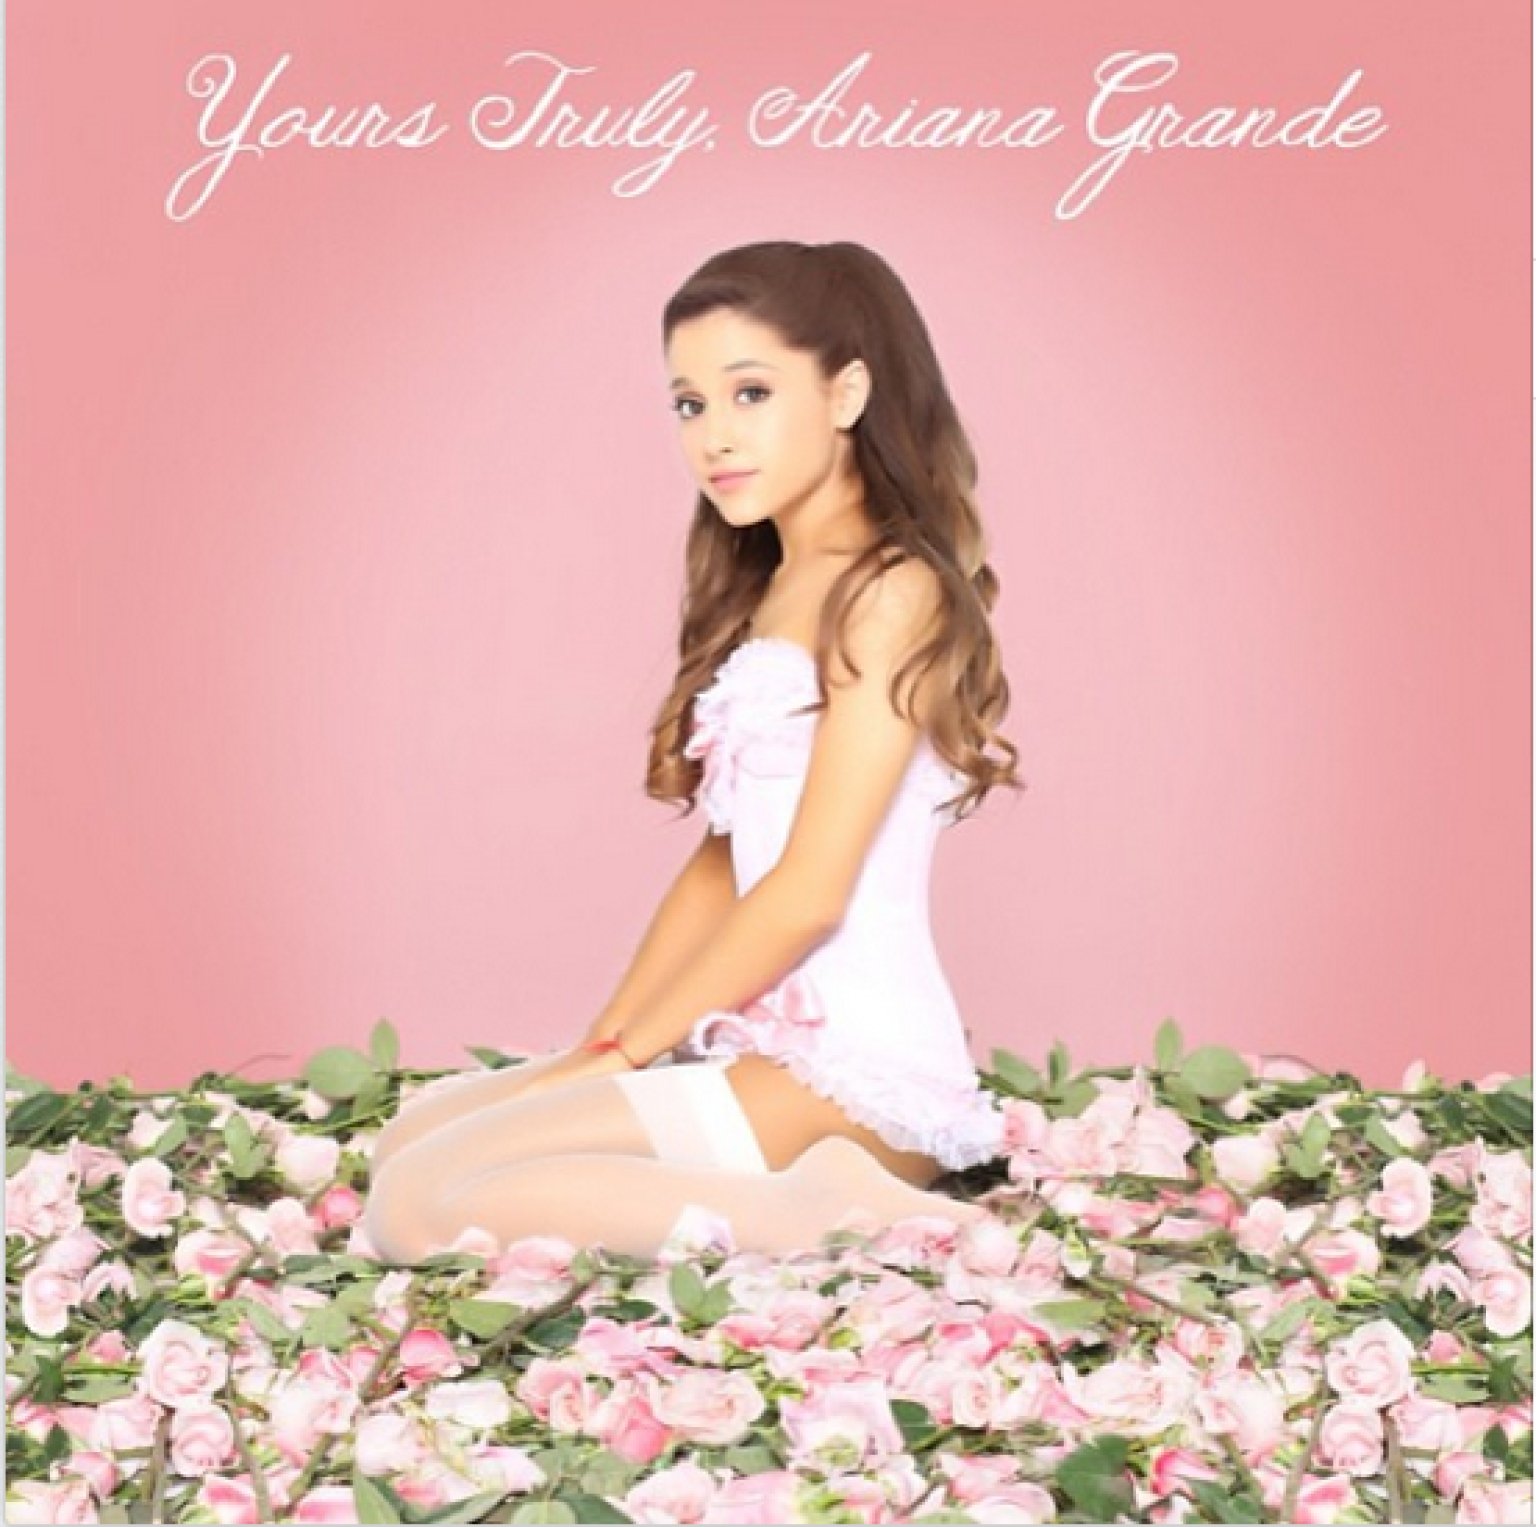 ariana grande yours truly album